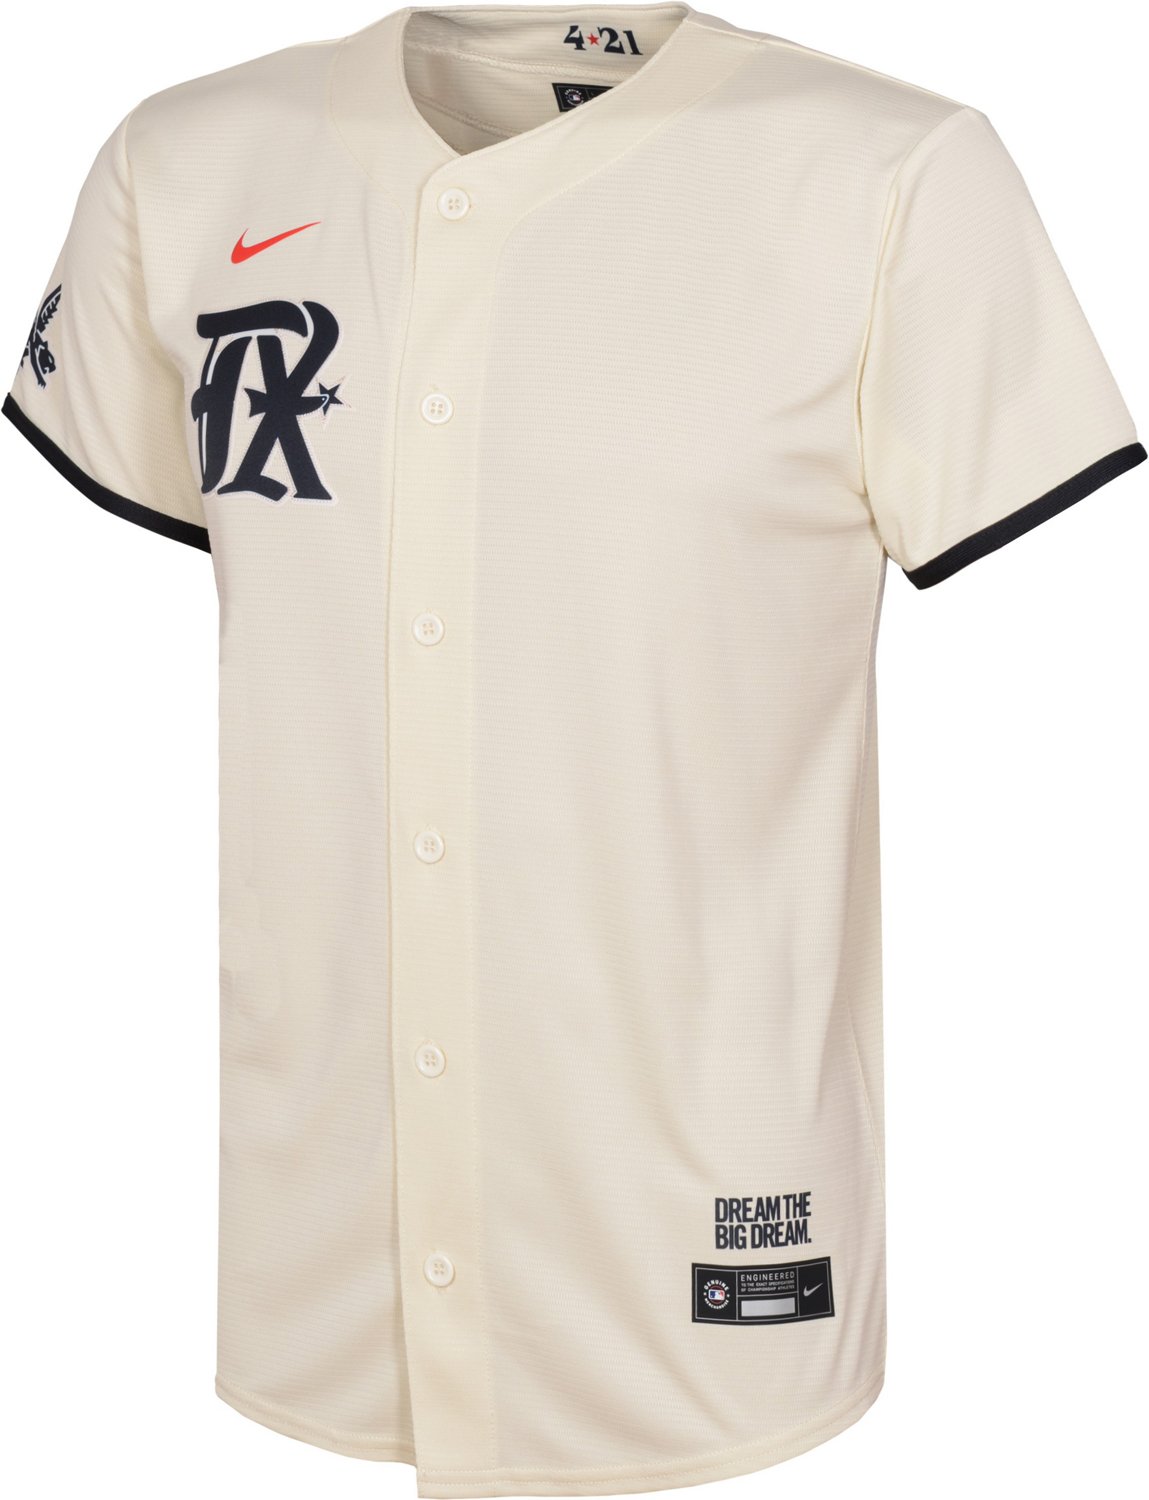 Boston Red Sox Nike Preschool MLB City Connect Replica Team Jersey - Gold